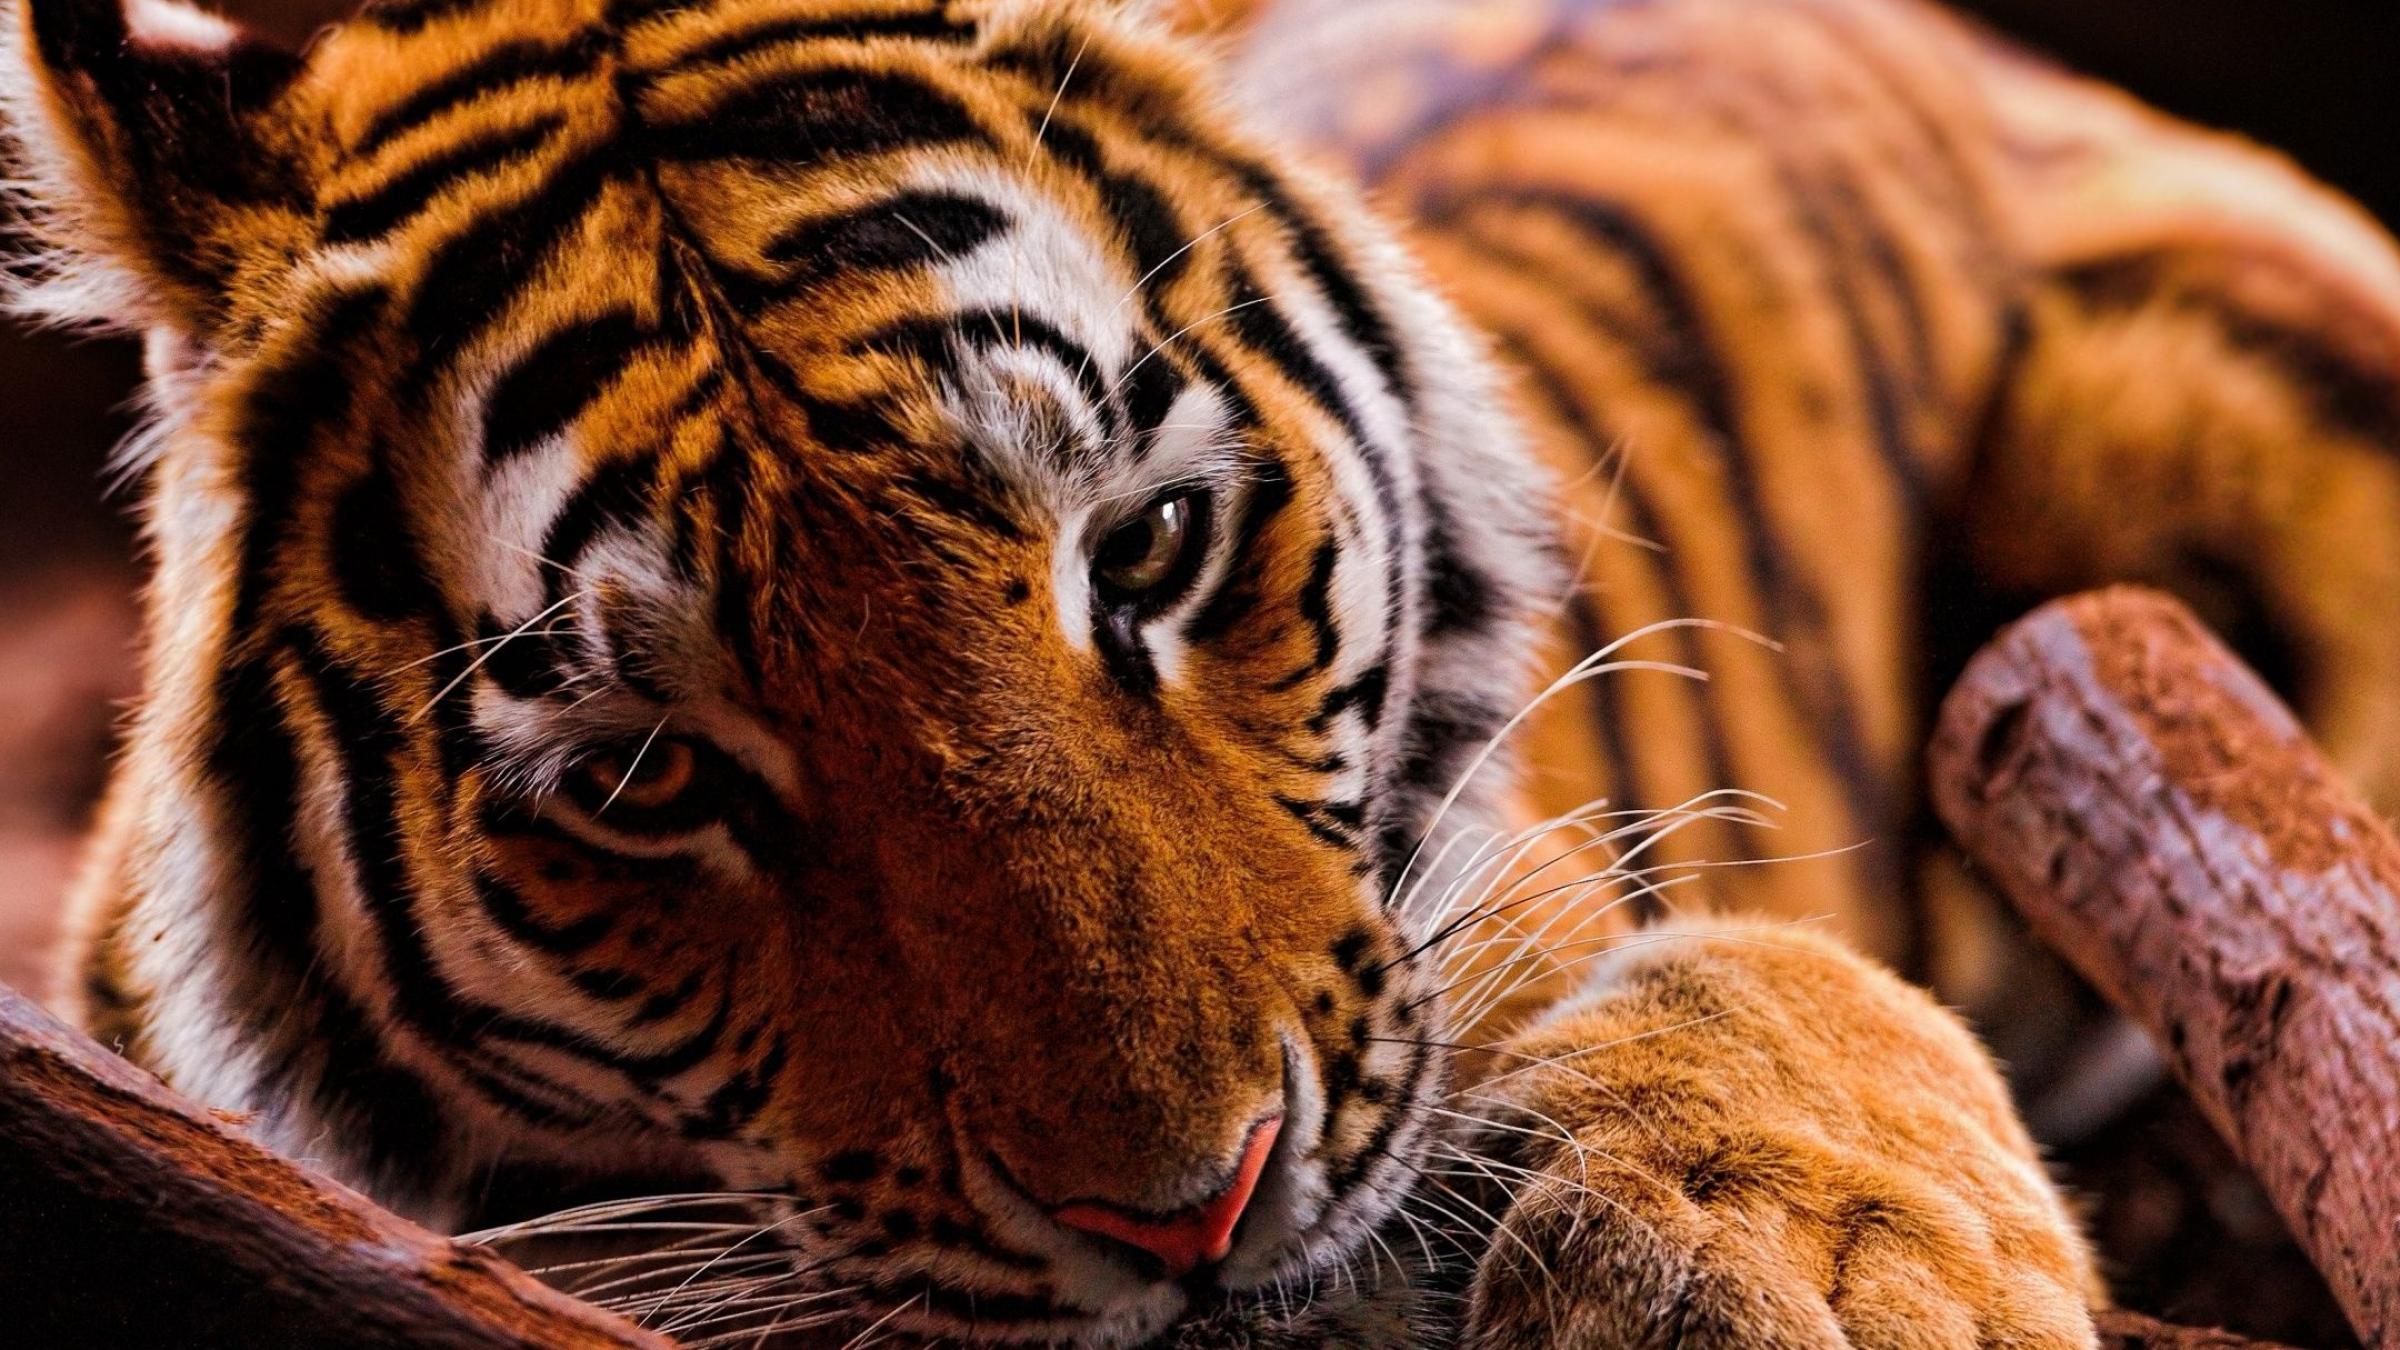 Jungle Animal, Teal tiger's allure, Cute and wild, Striking tiger wallpaper, 2400x1350 HD Desktop